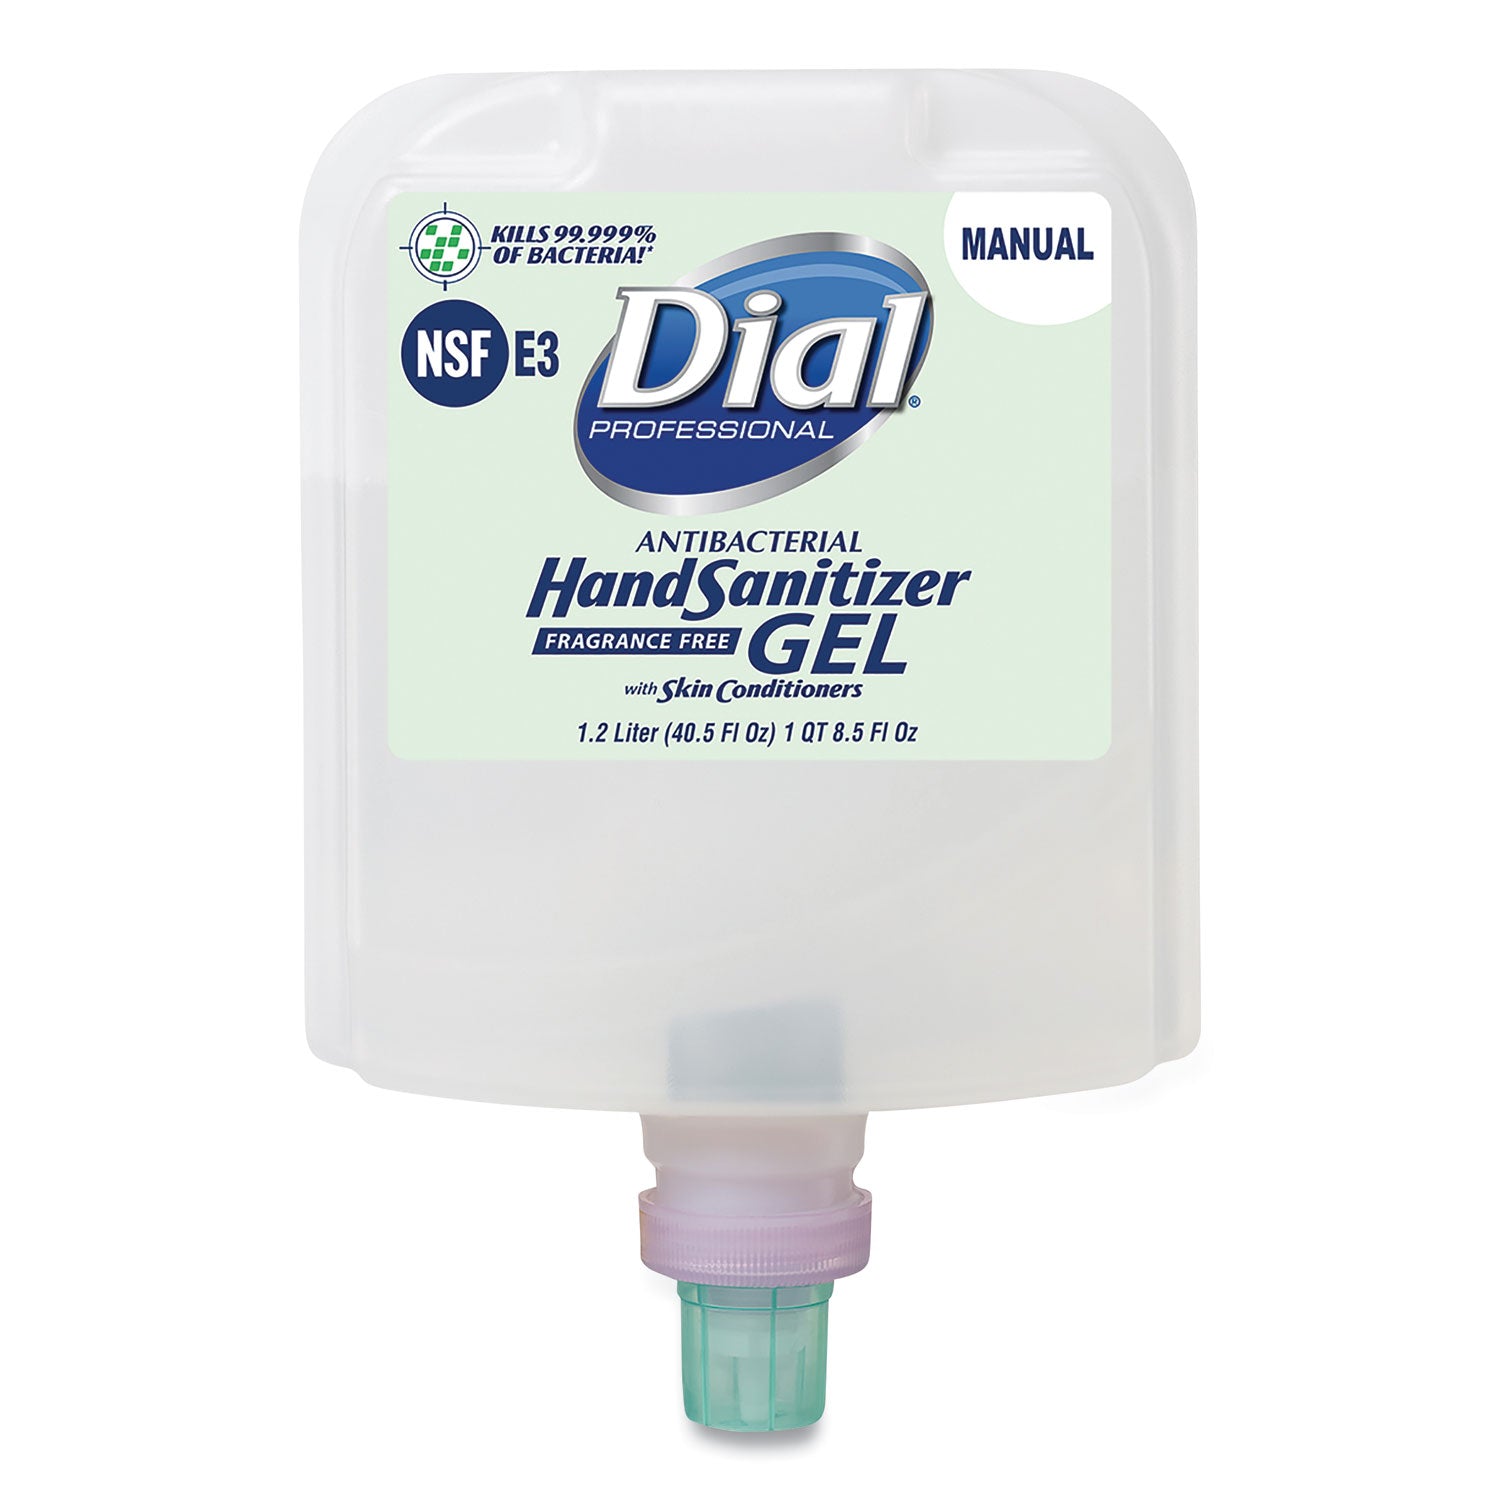 antibacterial-gel-hand-sanitizer-refill-for-dial-1700-dispenser-12-l-refill-fragrance-free-3-carton_dia19711 - 1